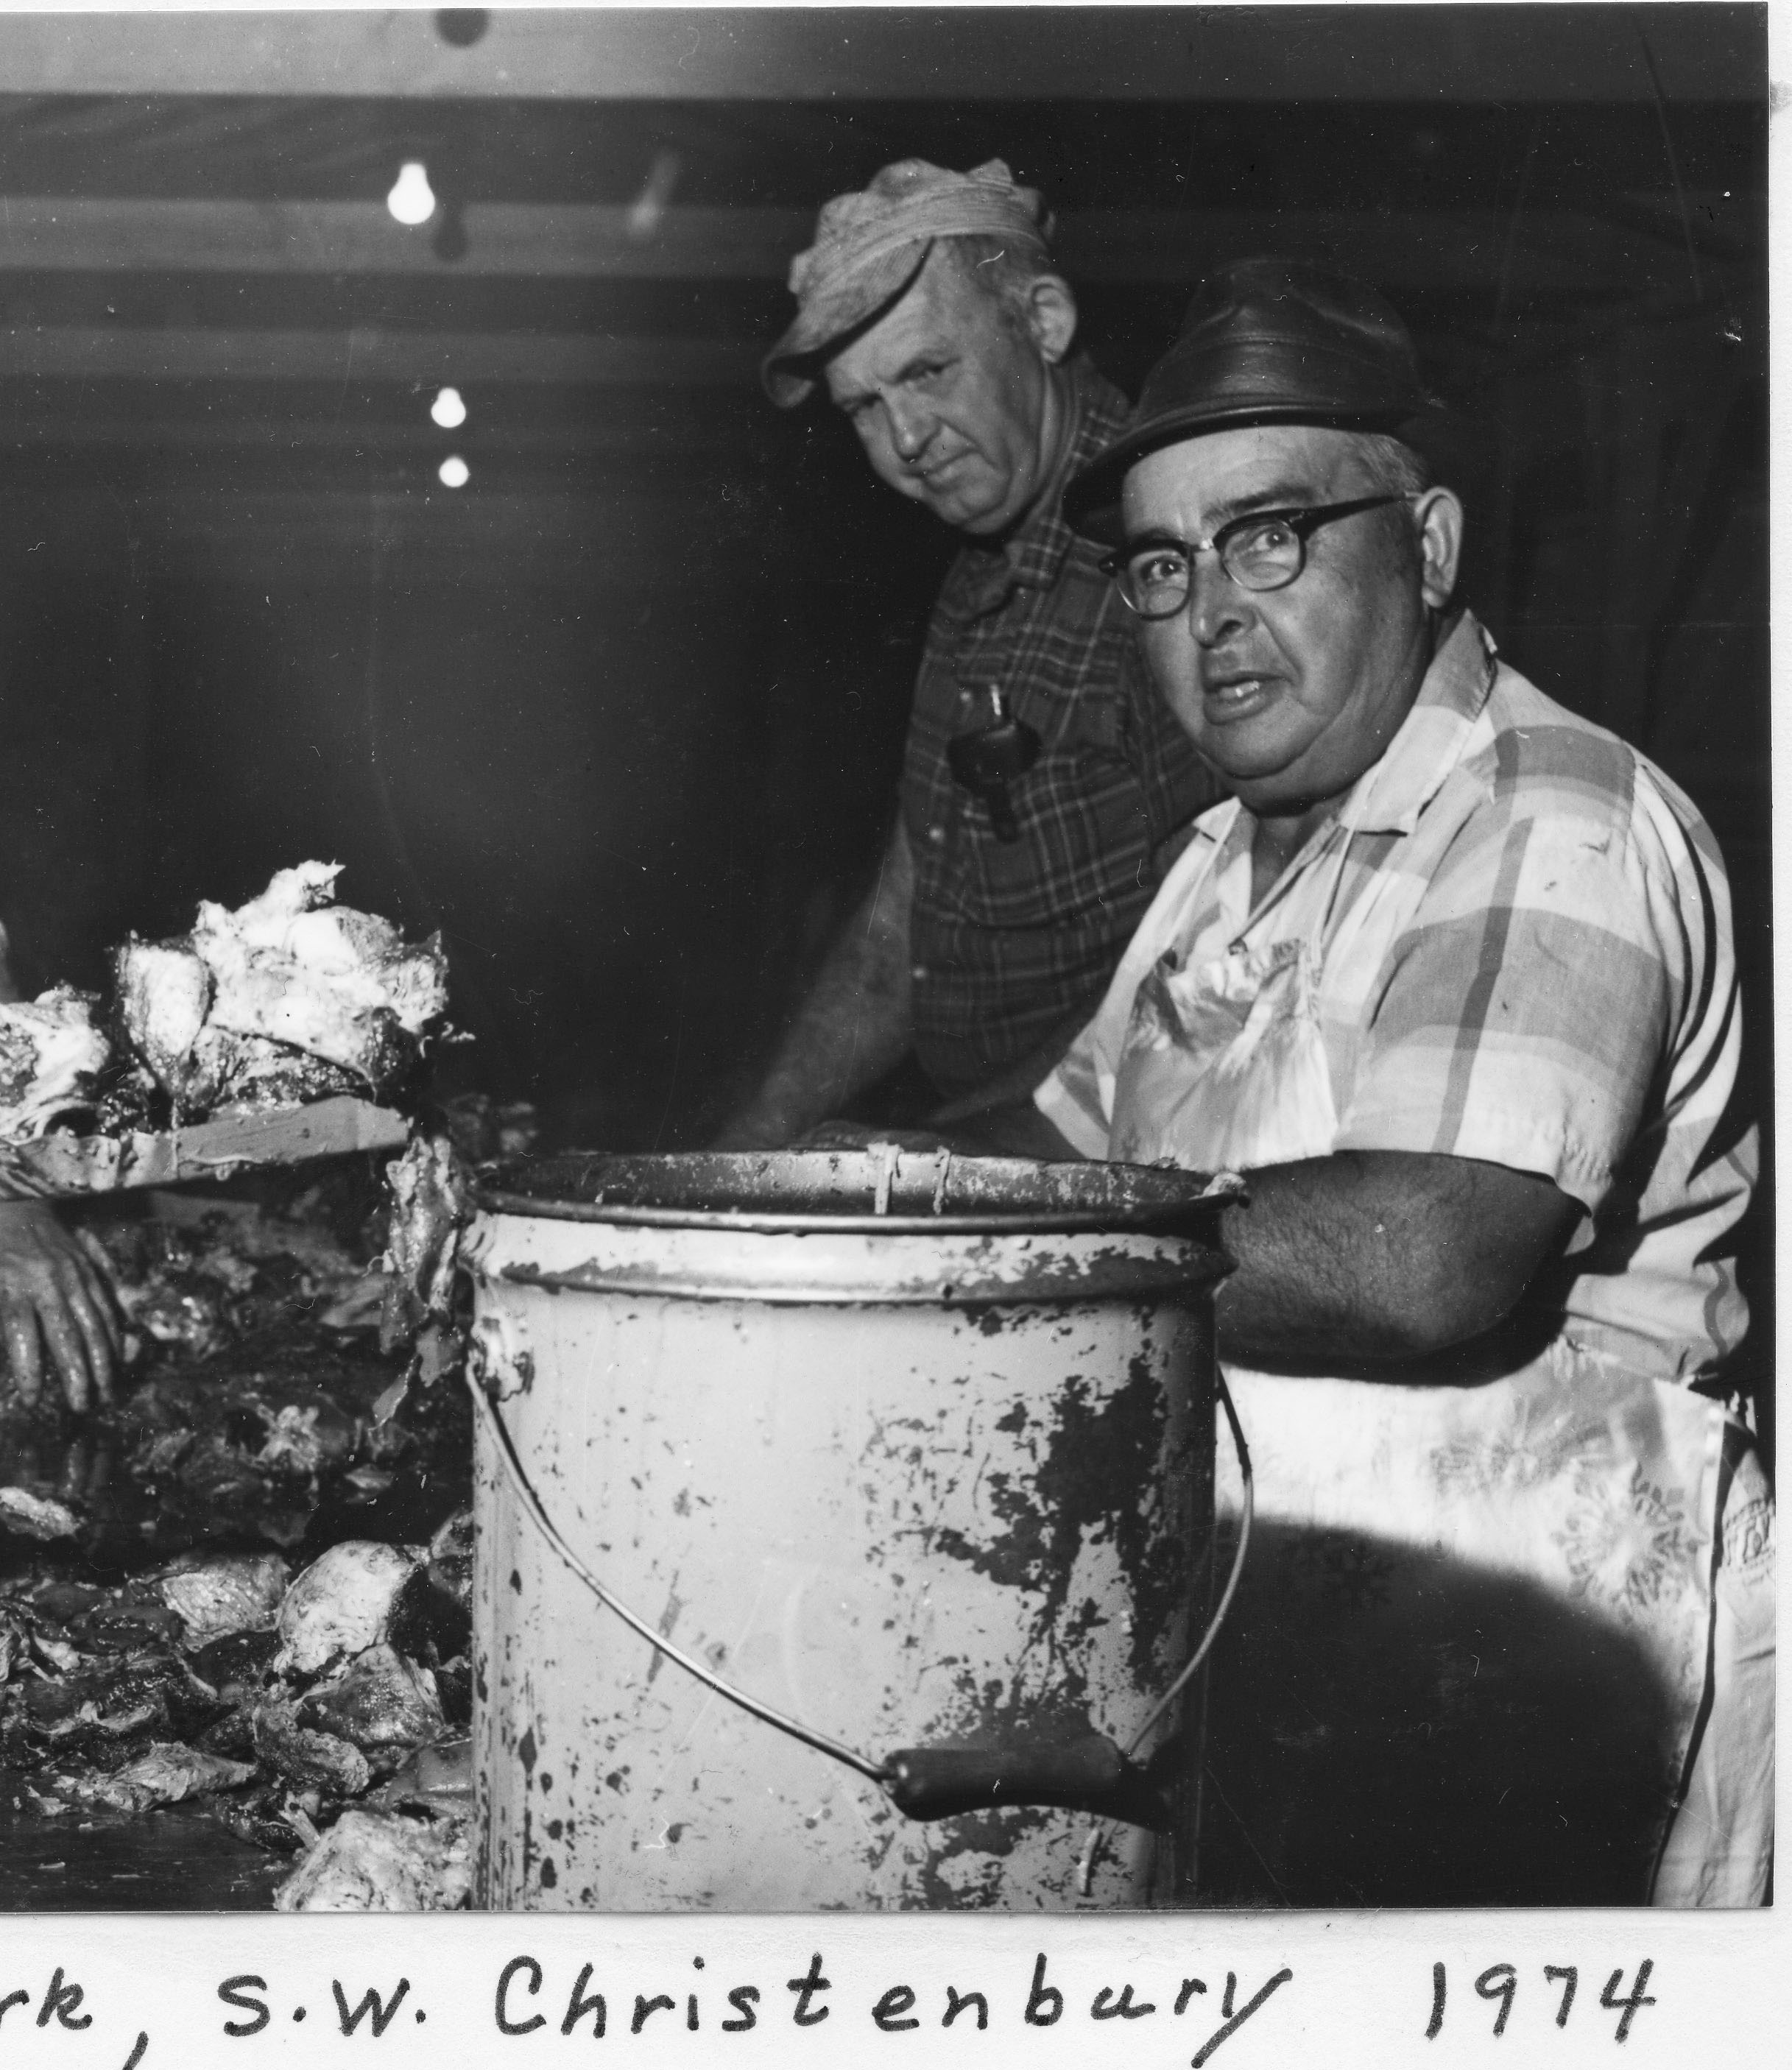 Wood Christenbury, chopping meat 1974